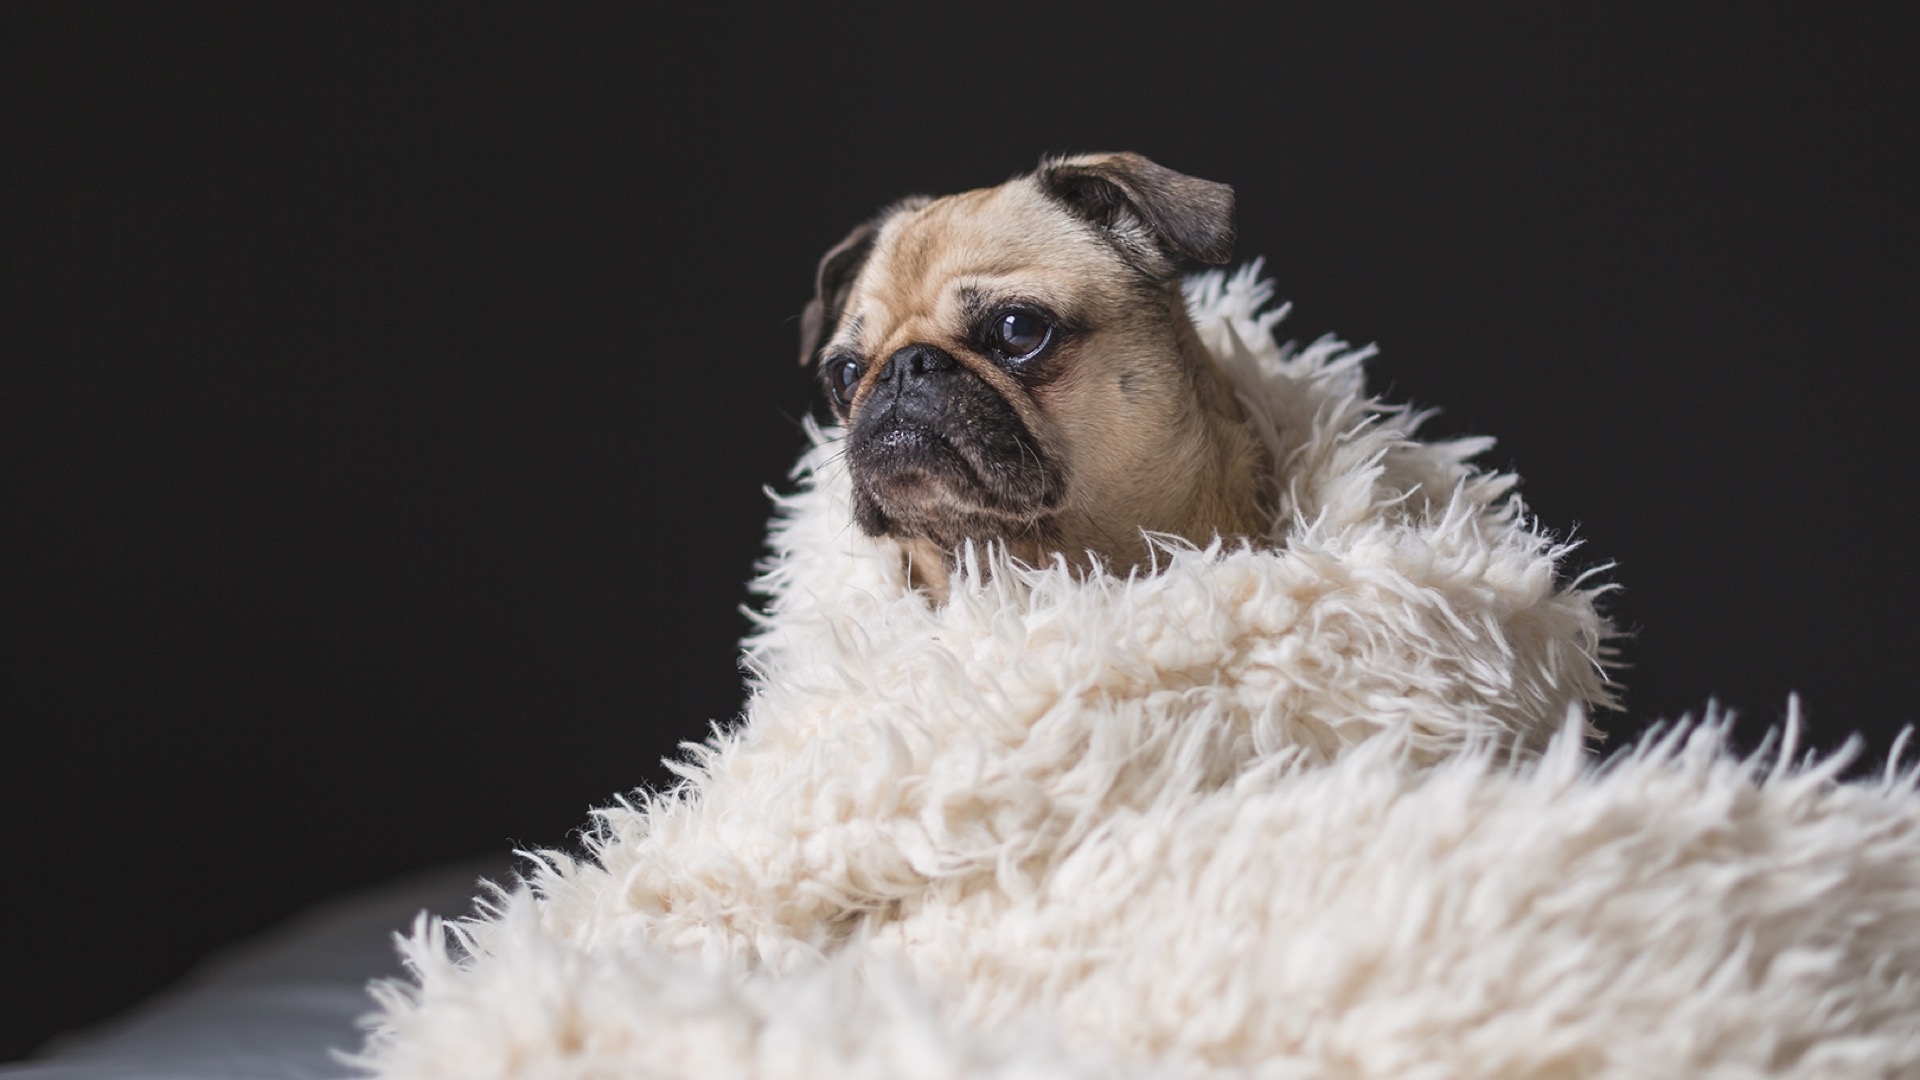 pug in blanket